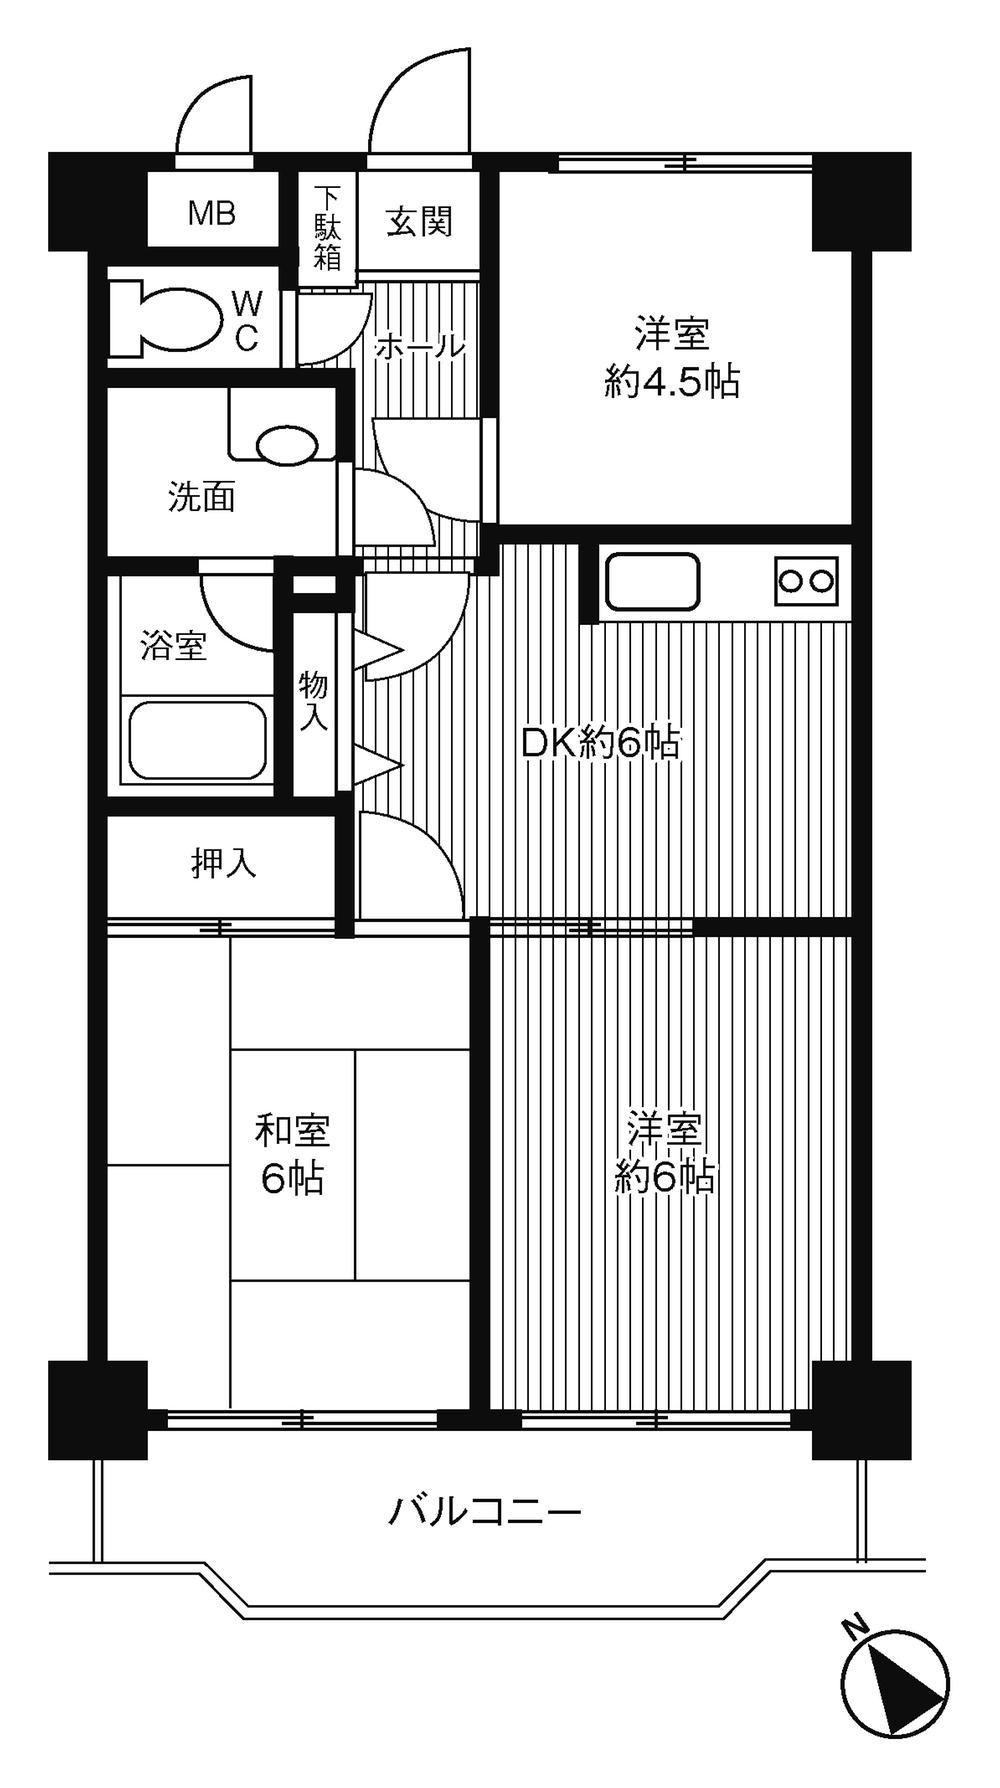 Floor plan. 3DK, Price 7.3 million yen, Footprint 50.6 sq m , Balcony area 7.73 sq m